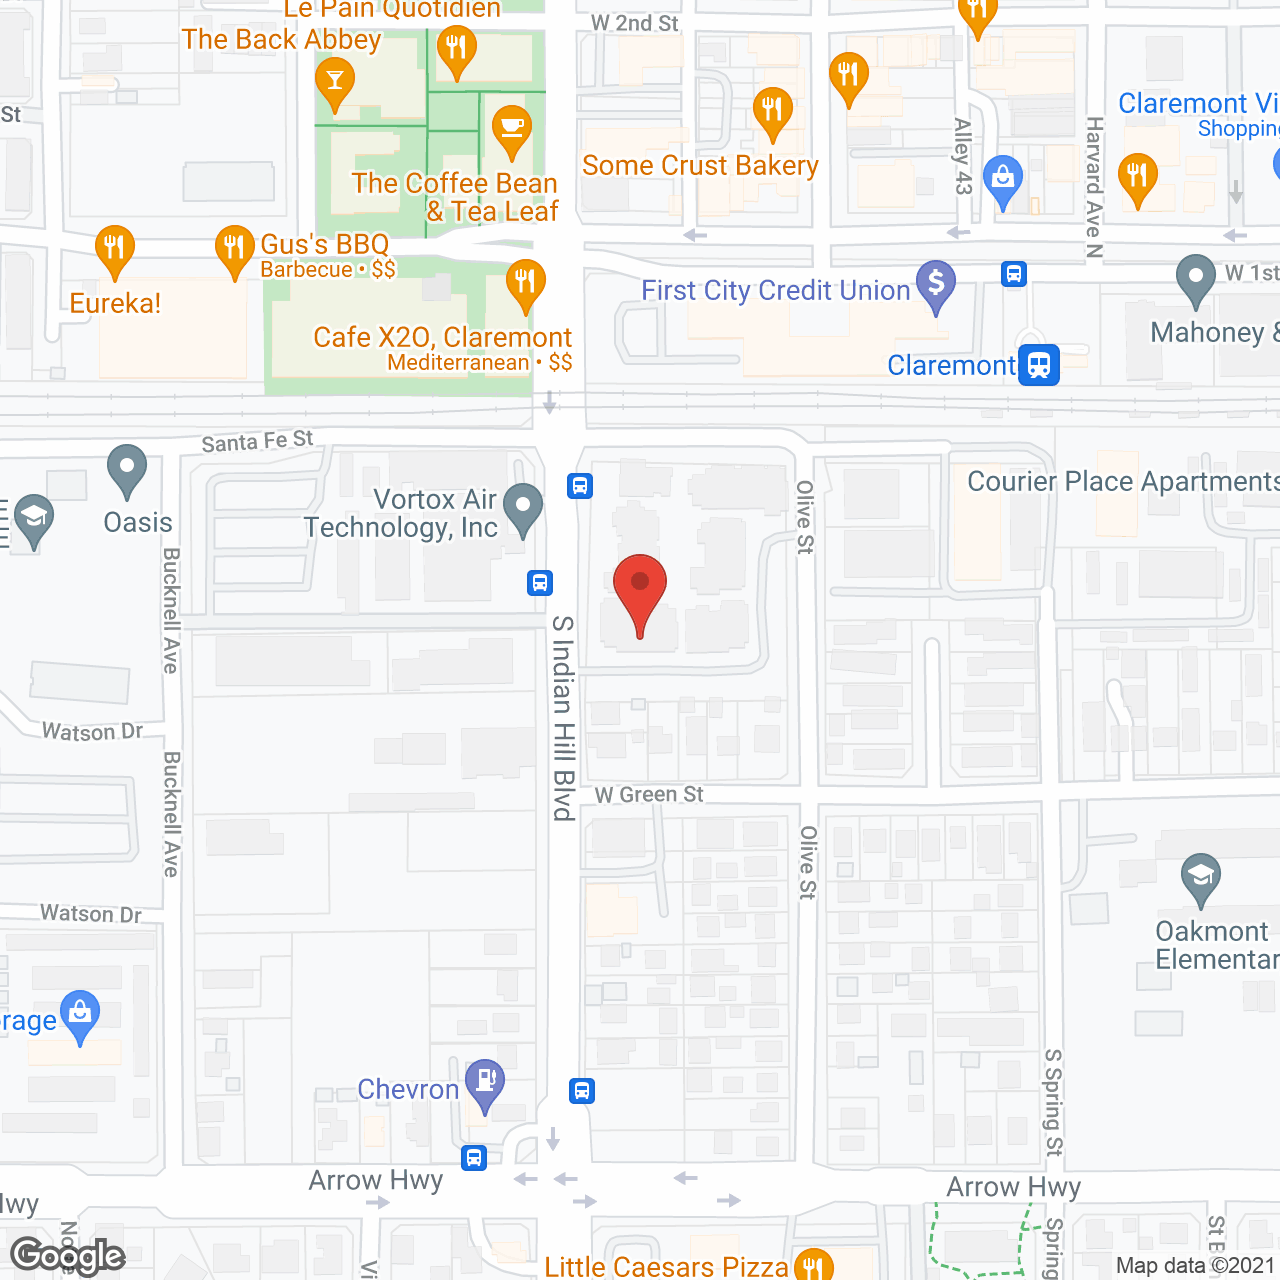 Claremont Villas in google map